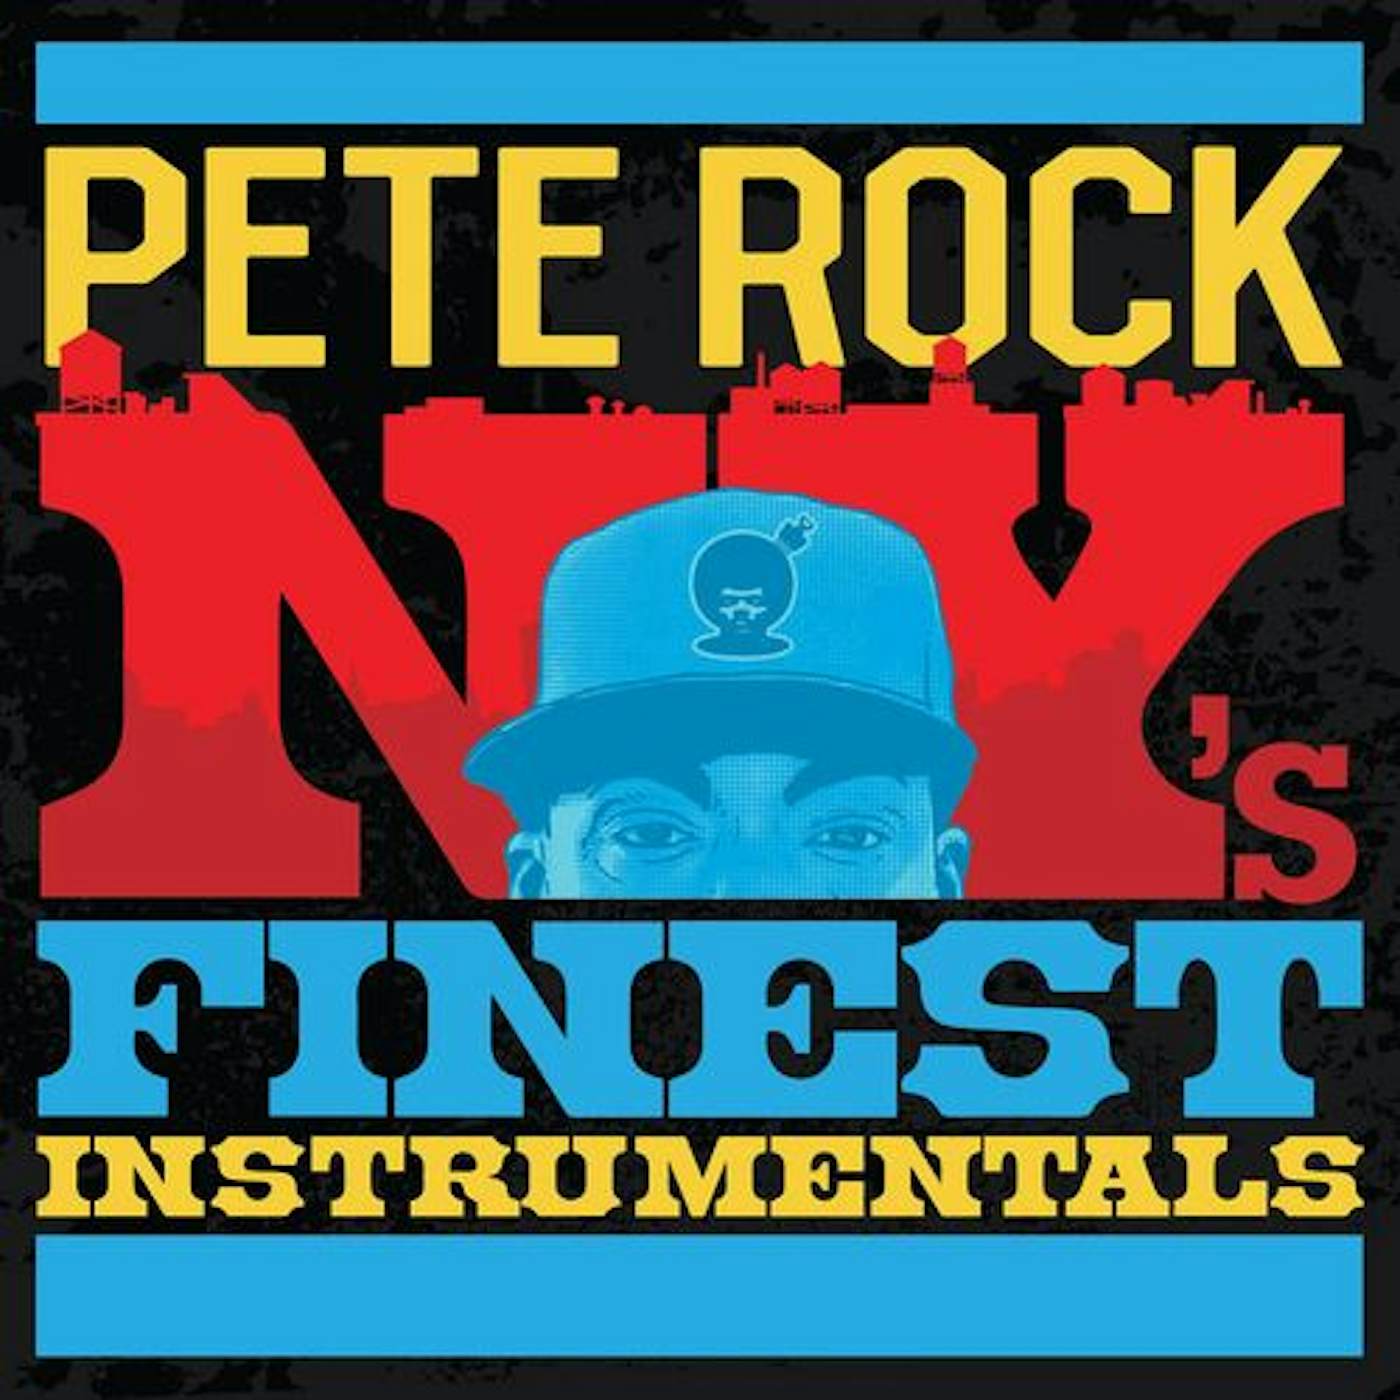 Pete Rock NY'S FINEST INSTRUMENTALS Vinyl Record